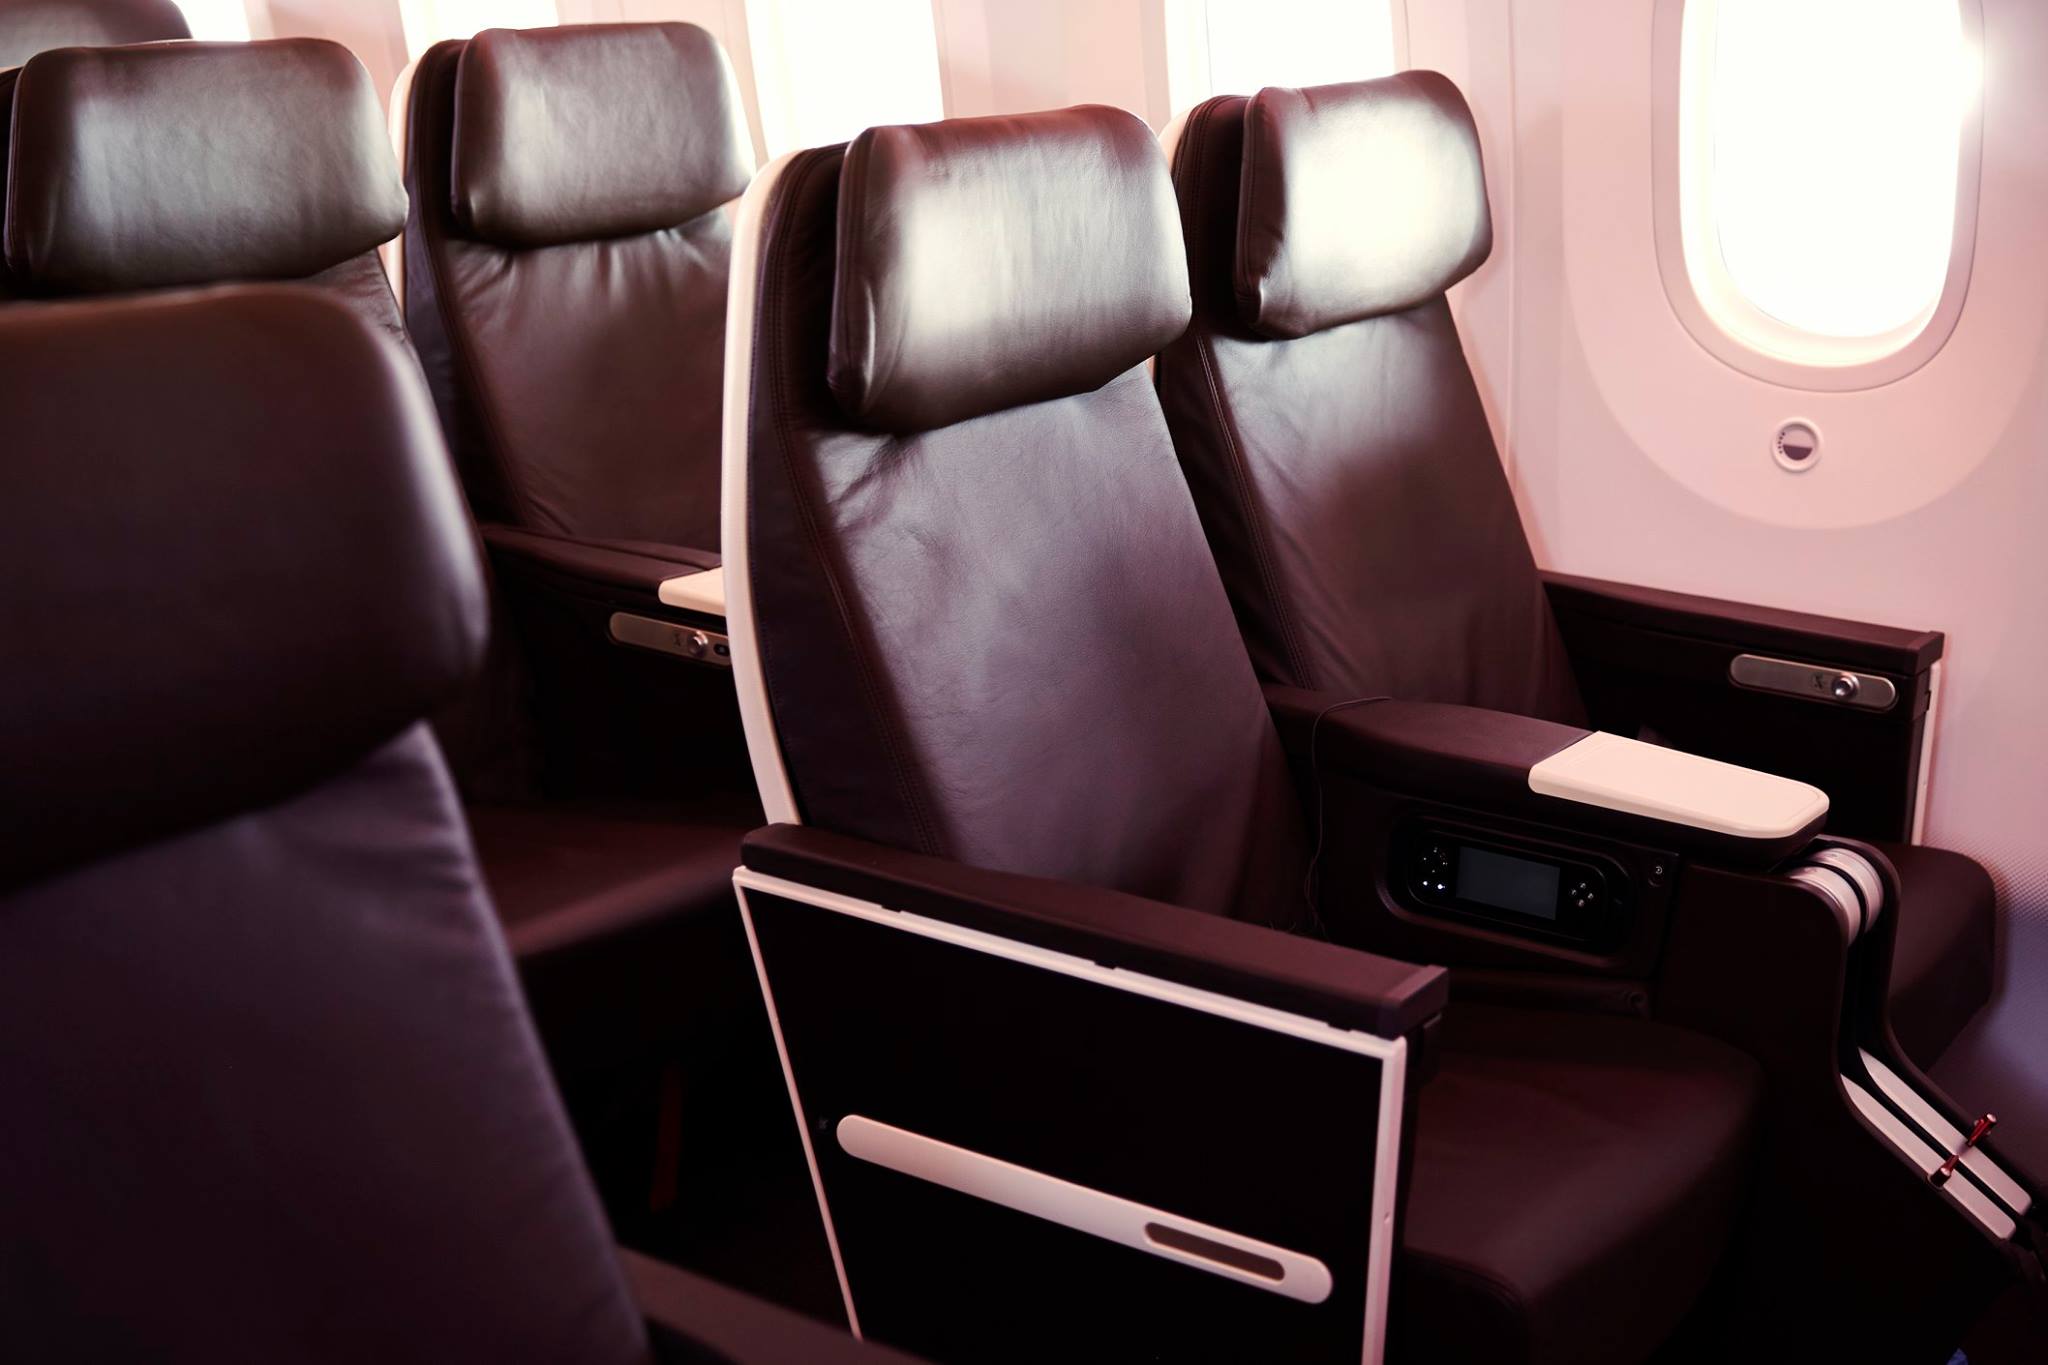 Review Virgin Atlantic Premium Economy A330 On An Overnight